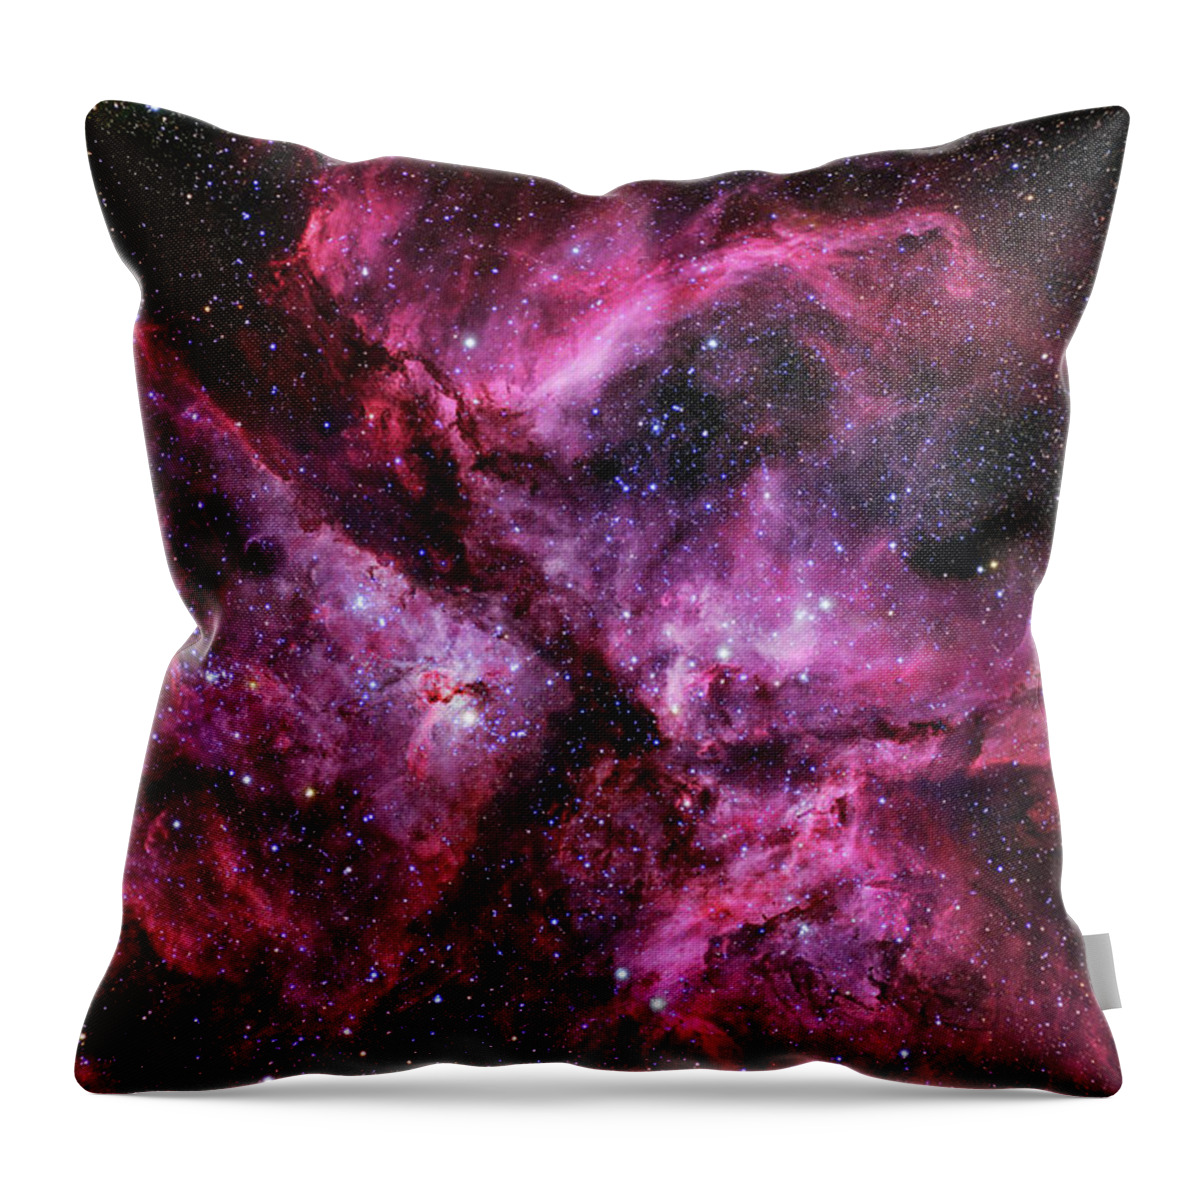 Purple Throw Pillow featuring the photograph The Eta Carinae Nebula by Stocktrek Images